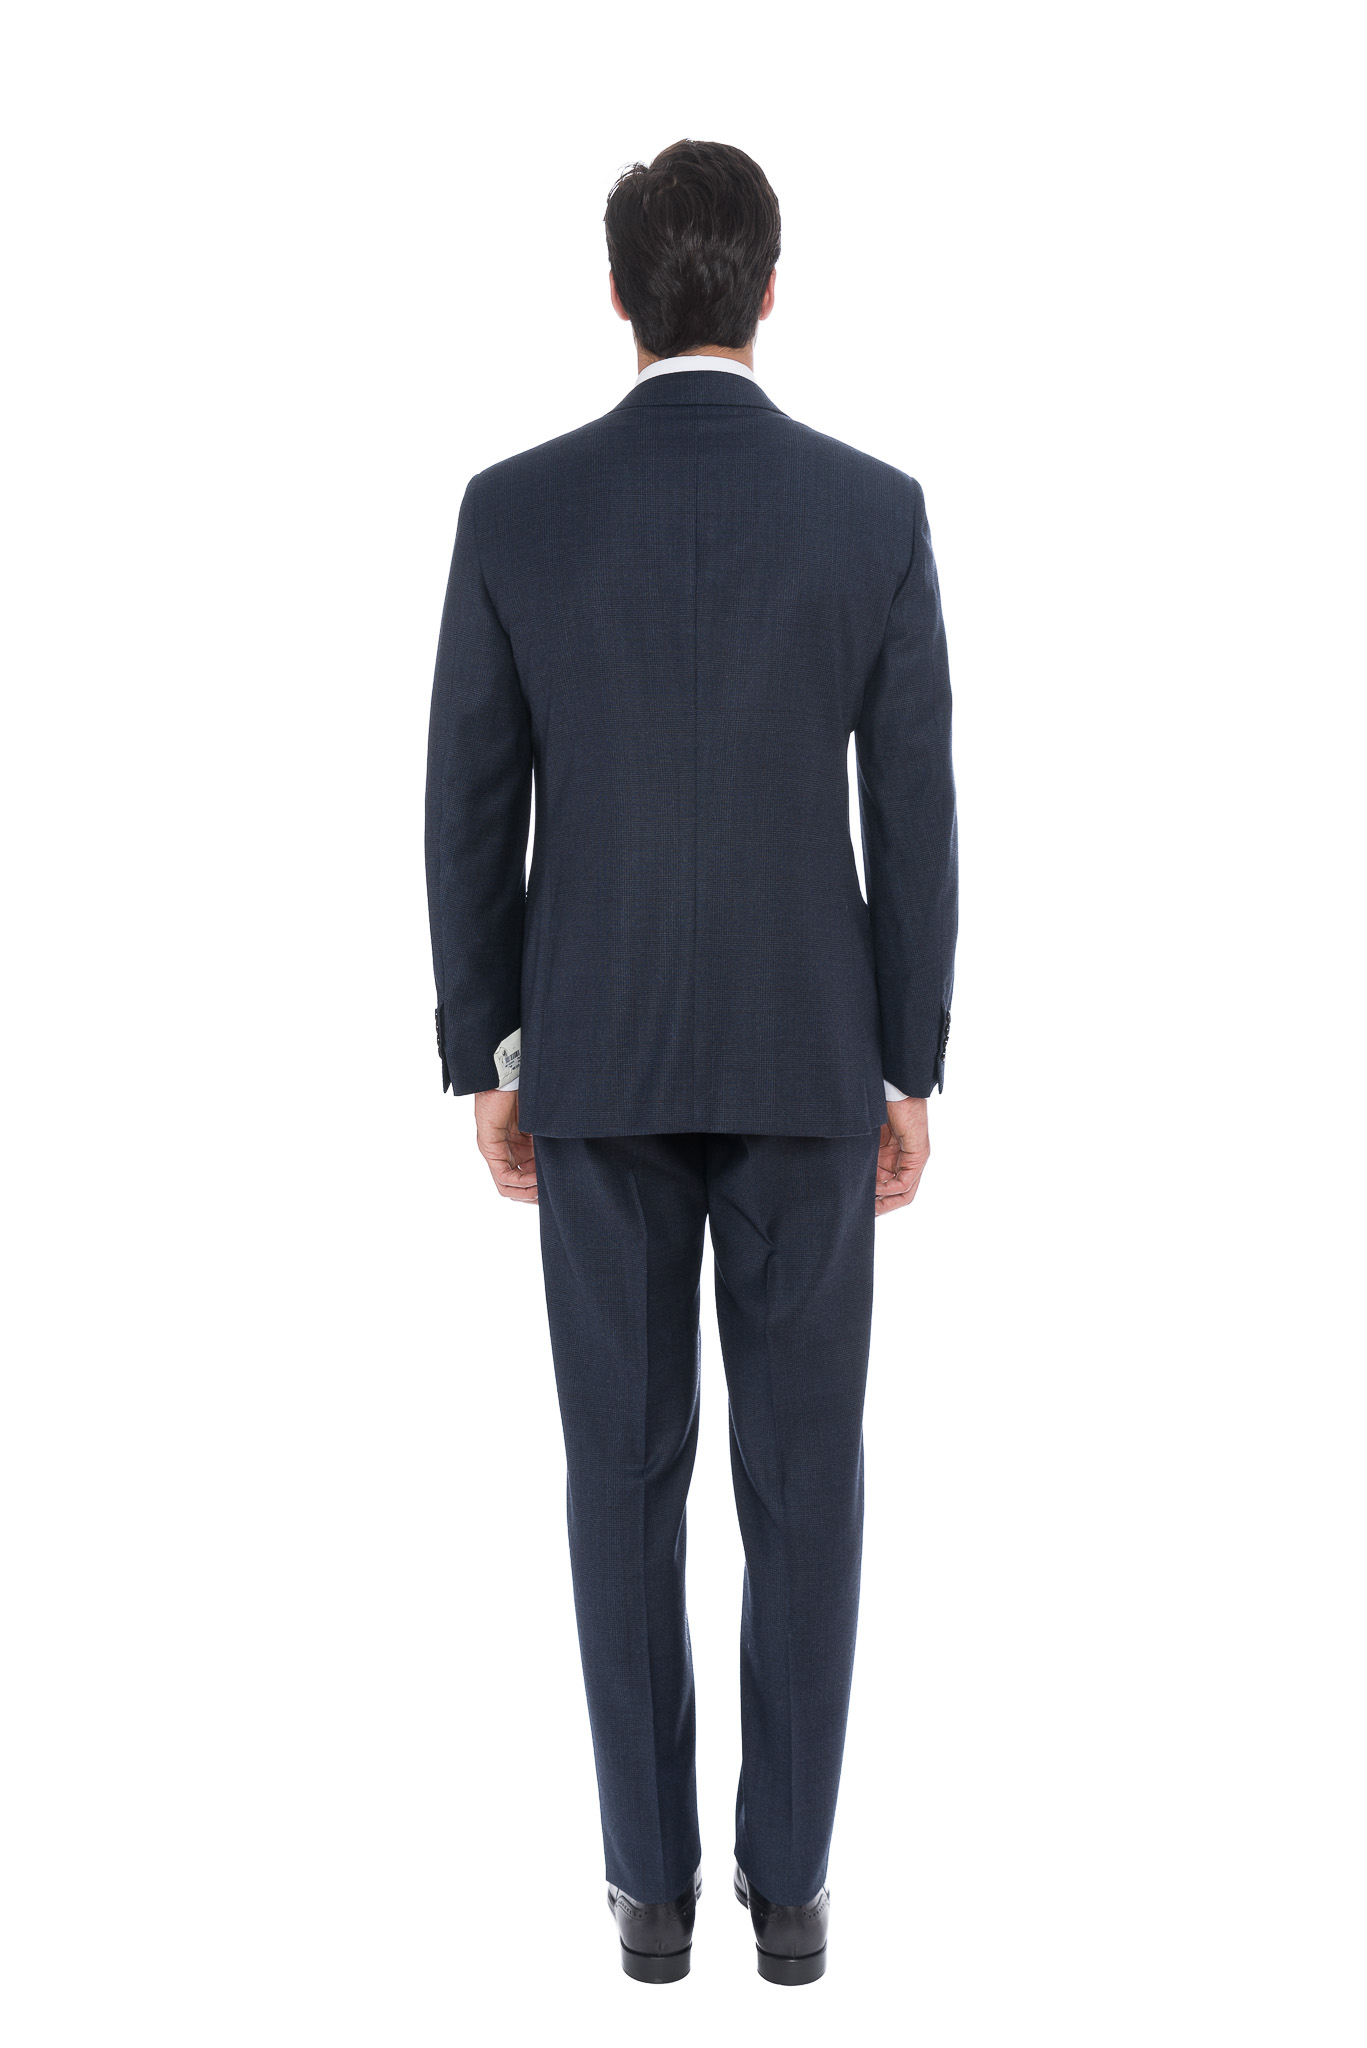 $3150 Belvest Wool 110's Blue Prince of Wales Suit Drop 7 Short F/W ...